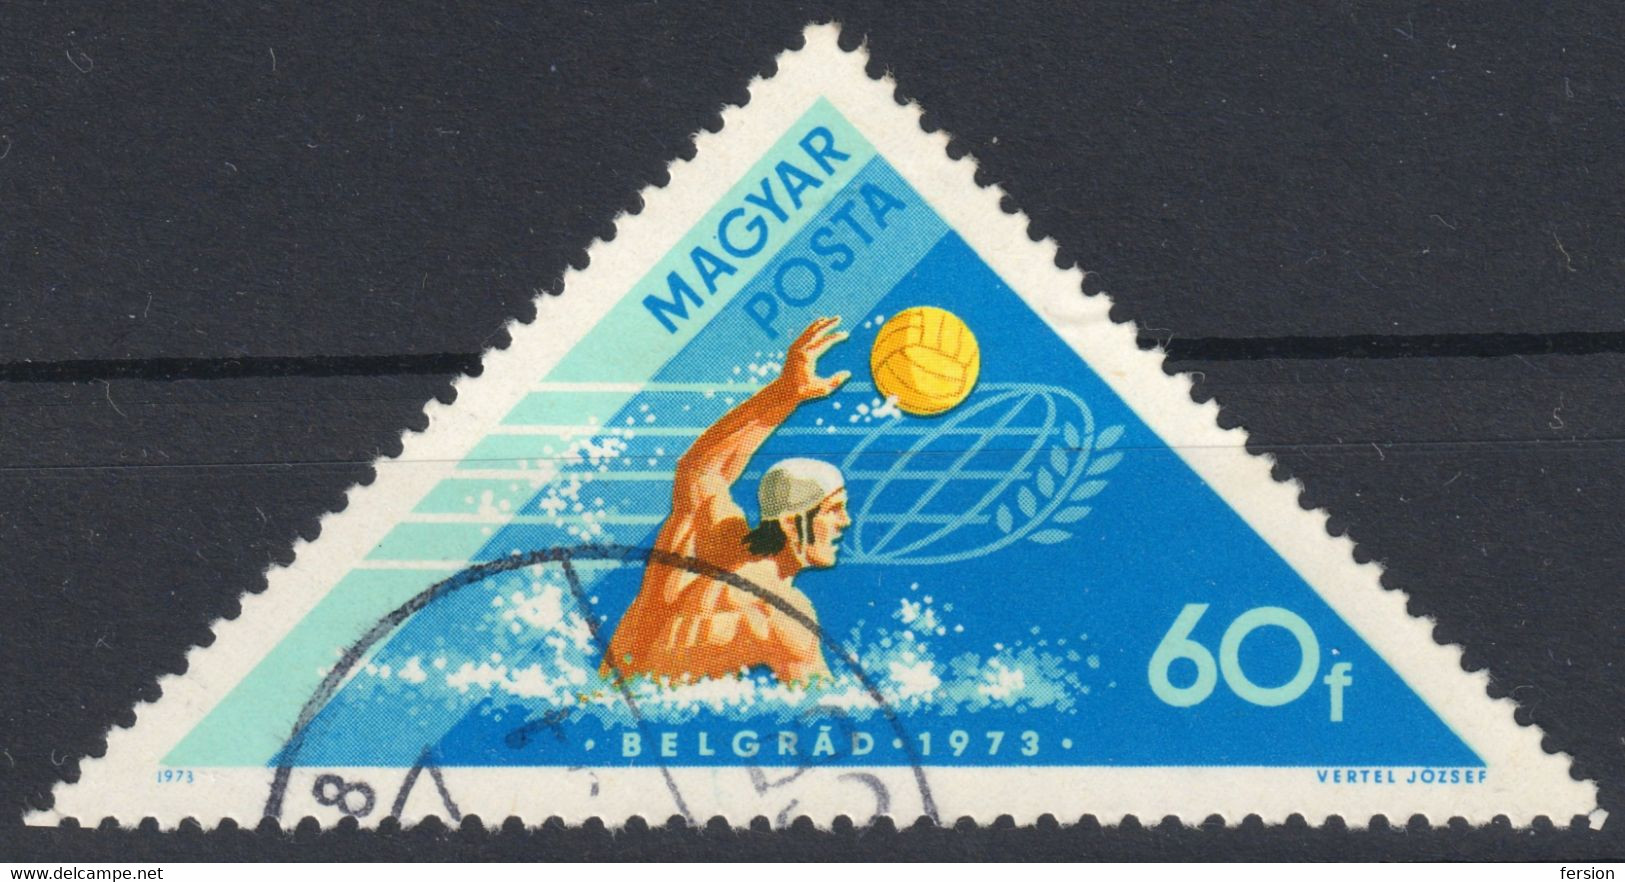 TRIANGLE STAMP Water Polo HUNGARY 1973 World Aquatics Championships Belgrade Yugoslavia - Water-Polo